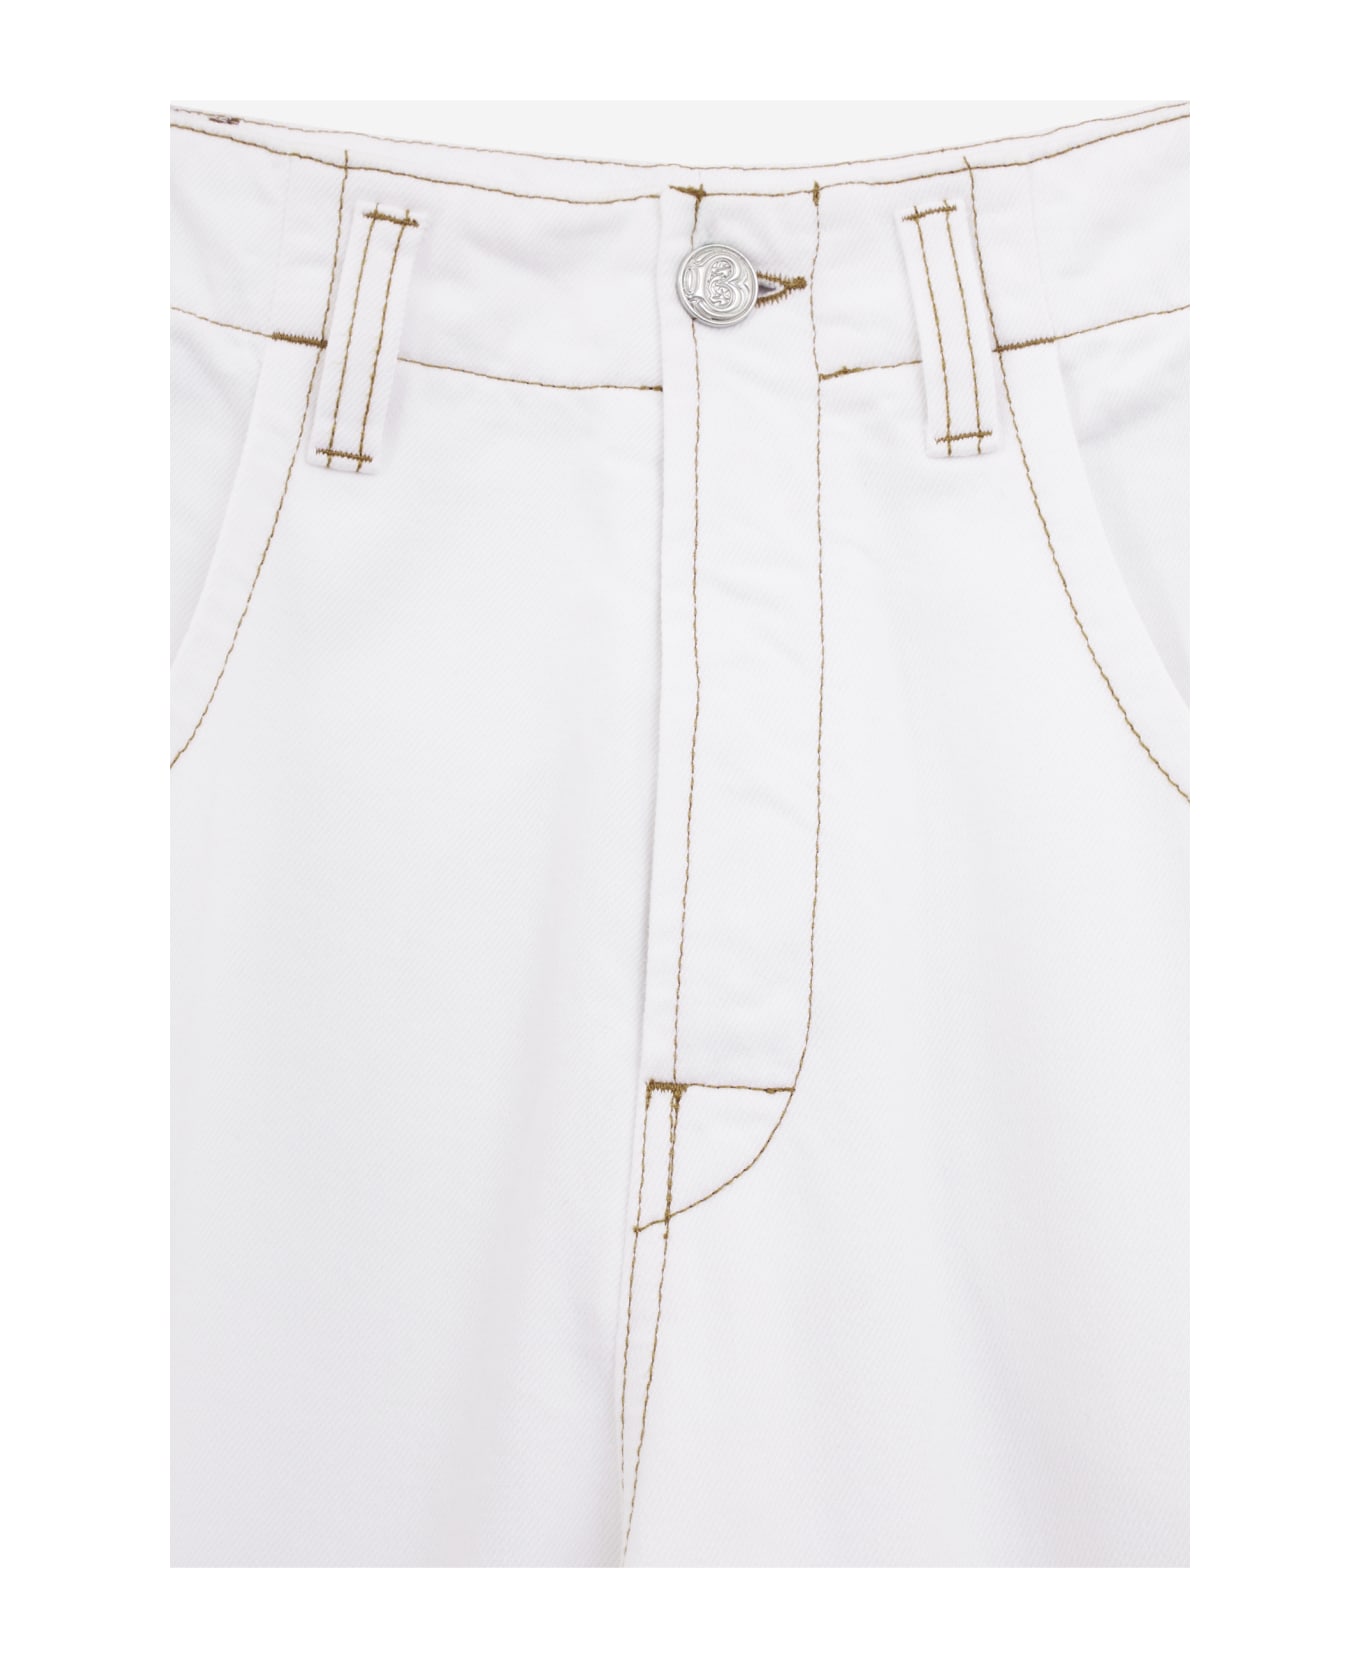 Bluemarble Hibiscus Denim Jeans - white